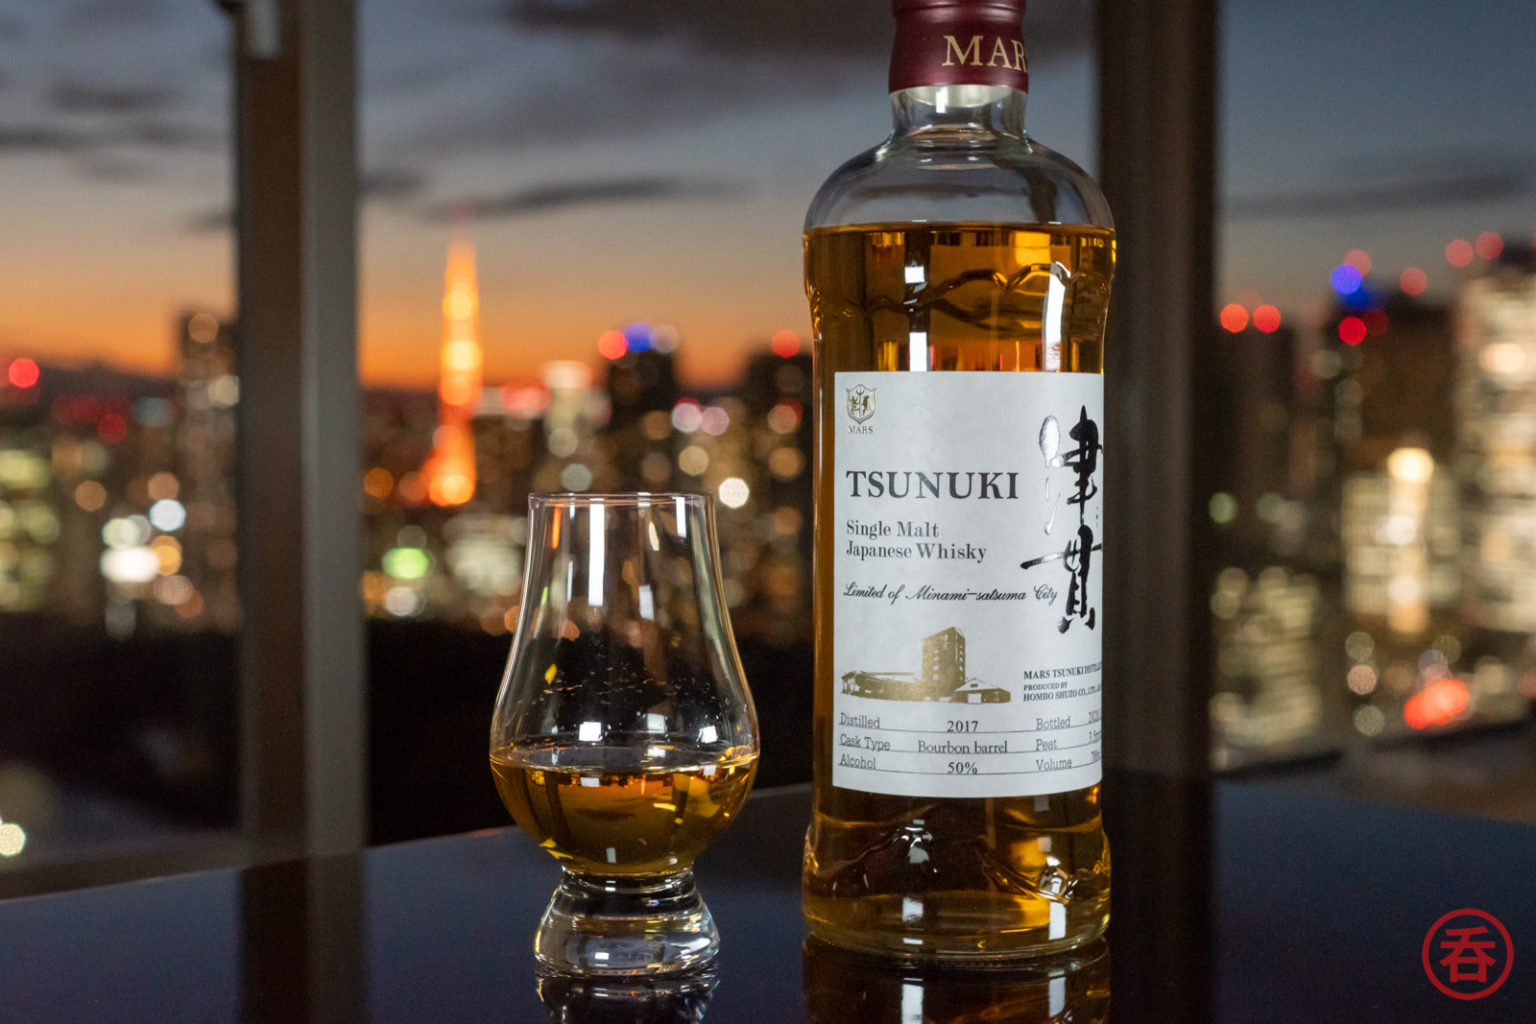 Review: Tsunuki Single Malt Japanese Whisky Limited of Minami-satsuma